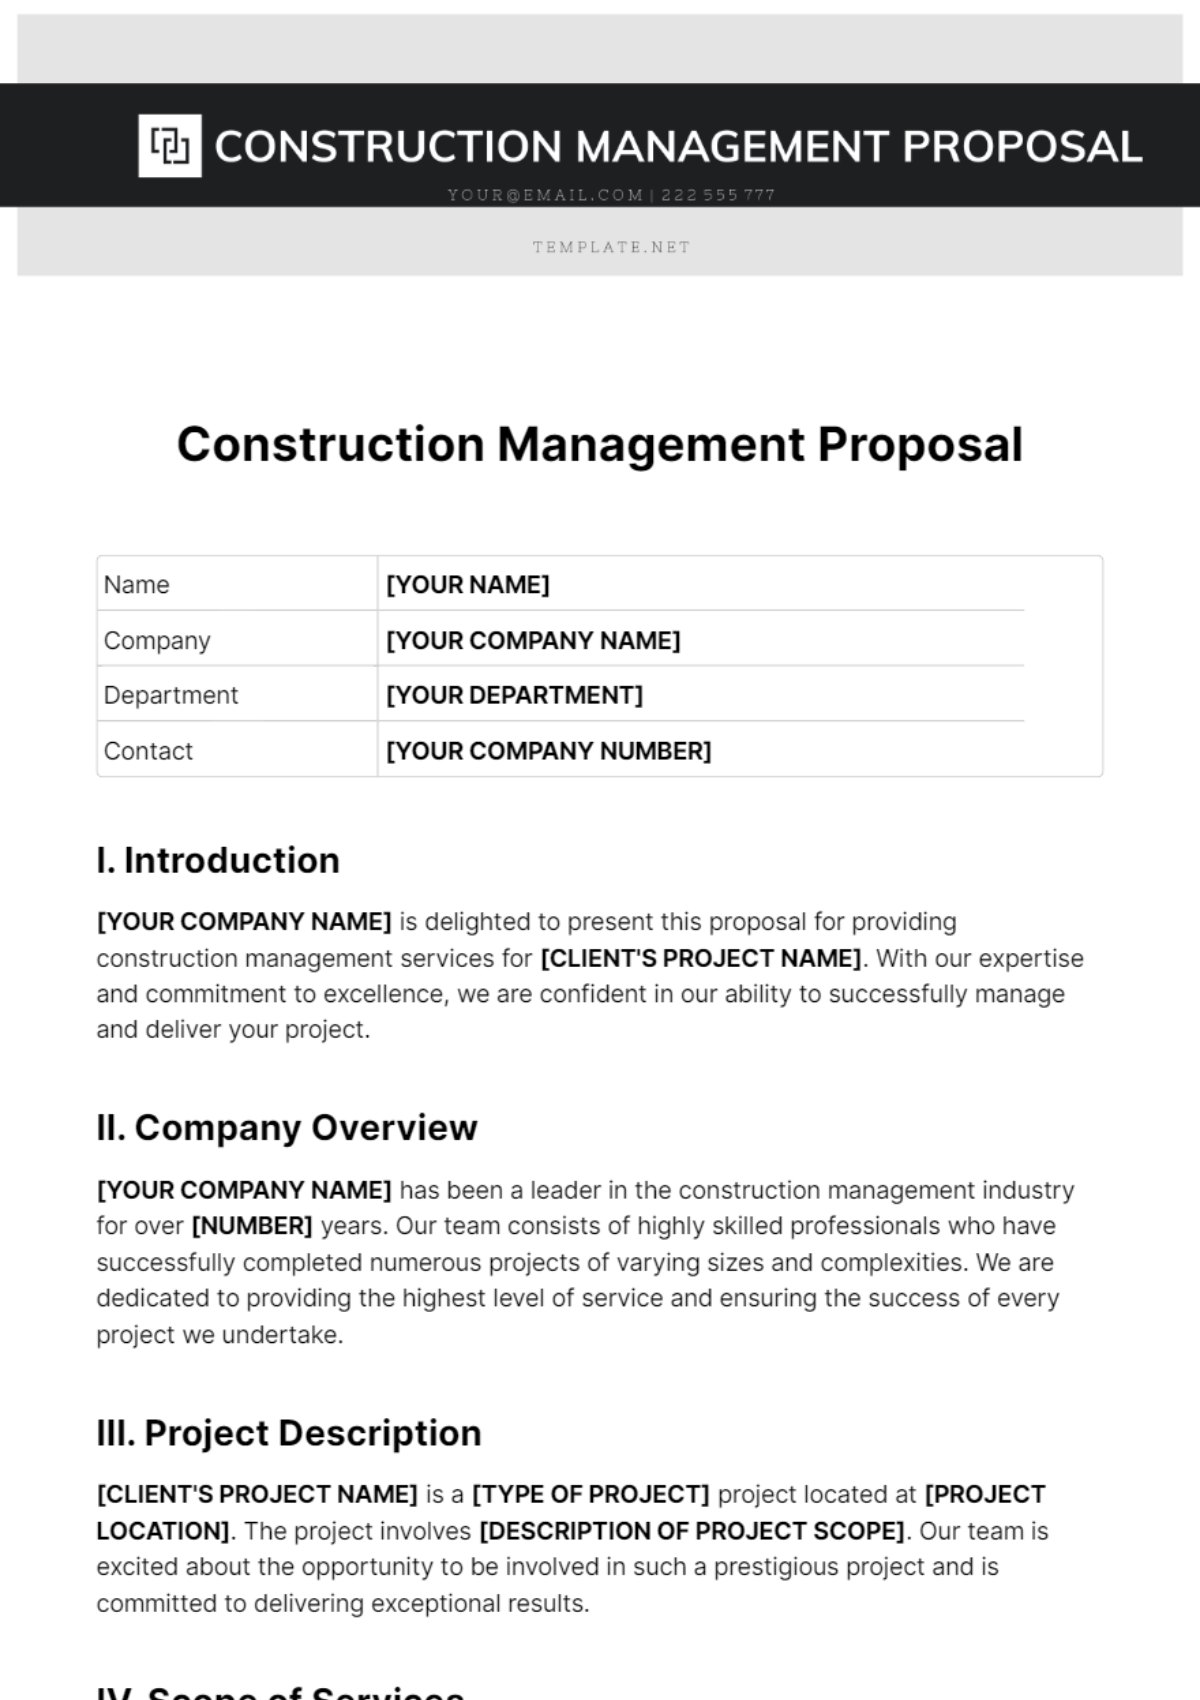 Free Construction Management Proposal Template